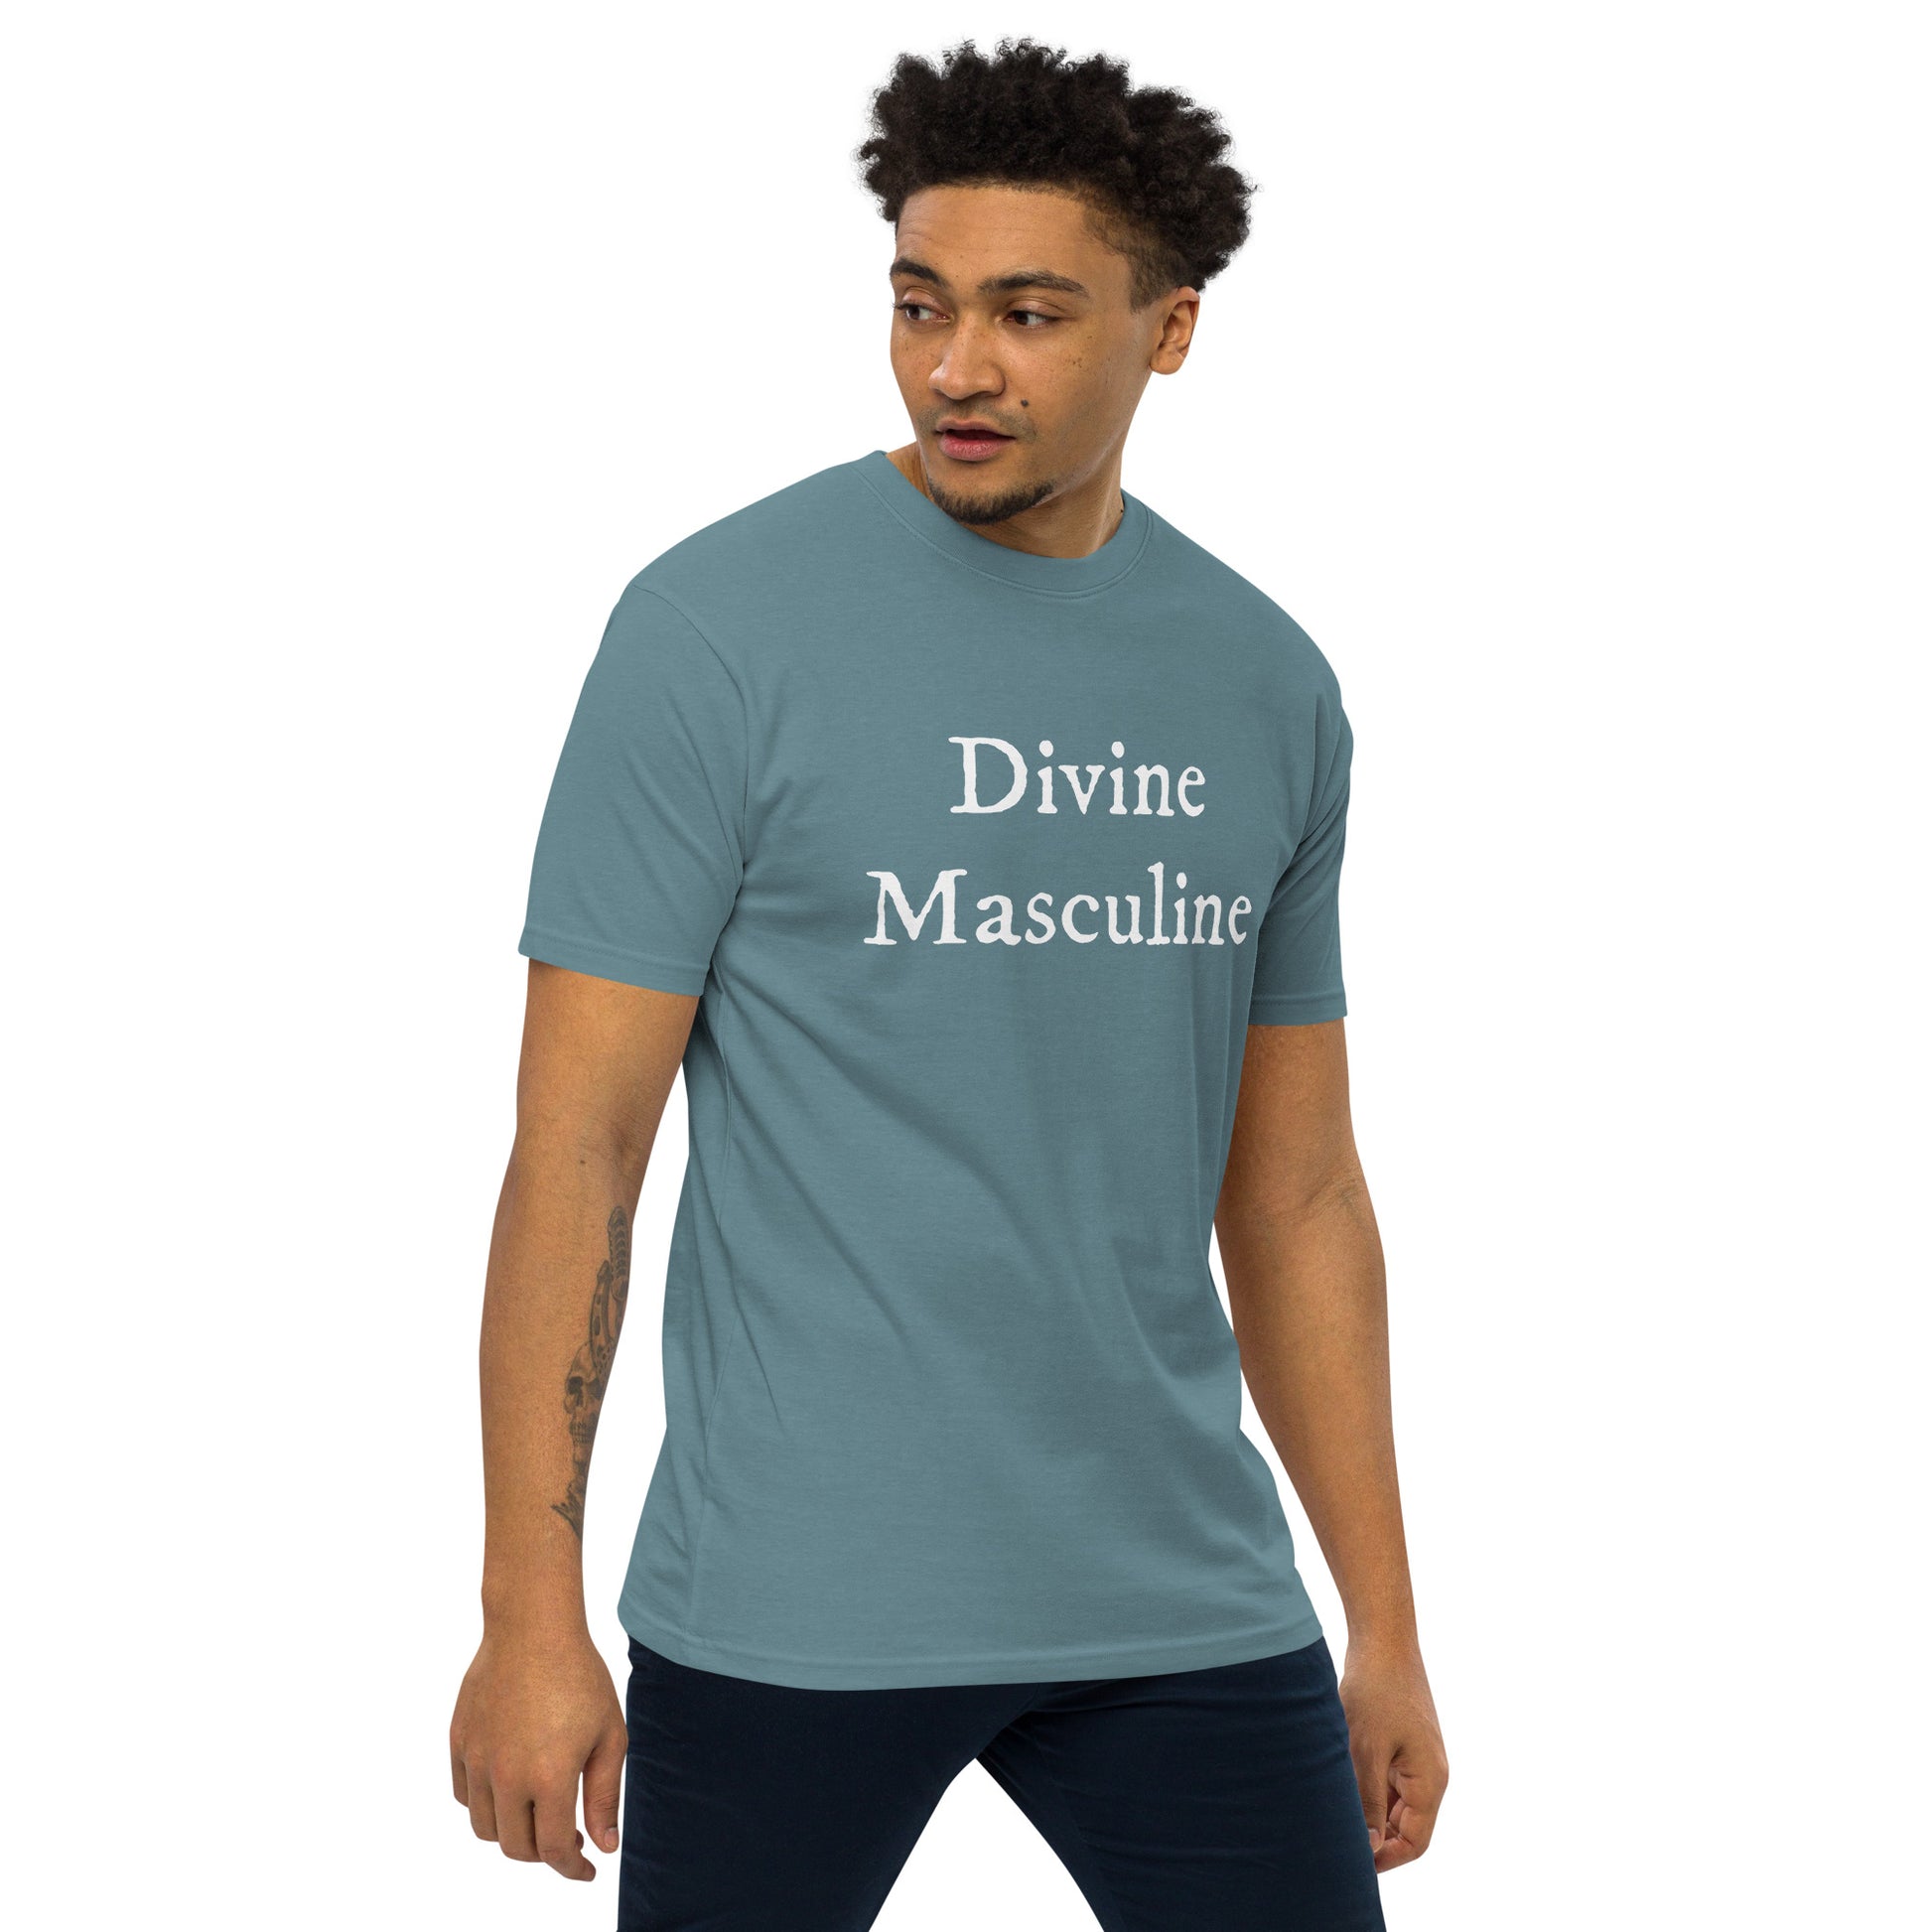 Masculine Energy Statement Shirt